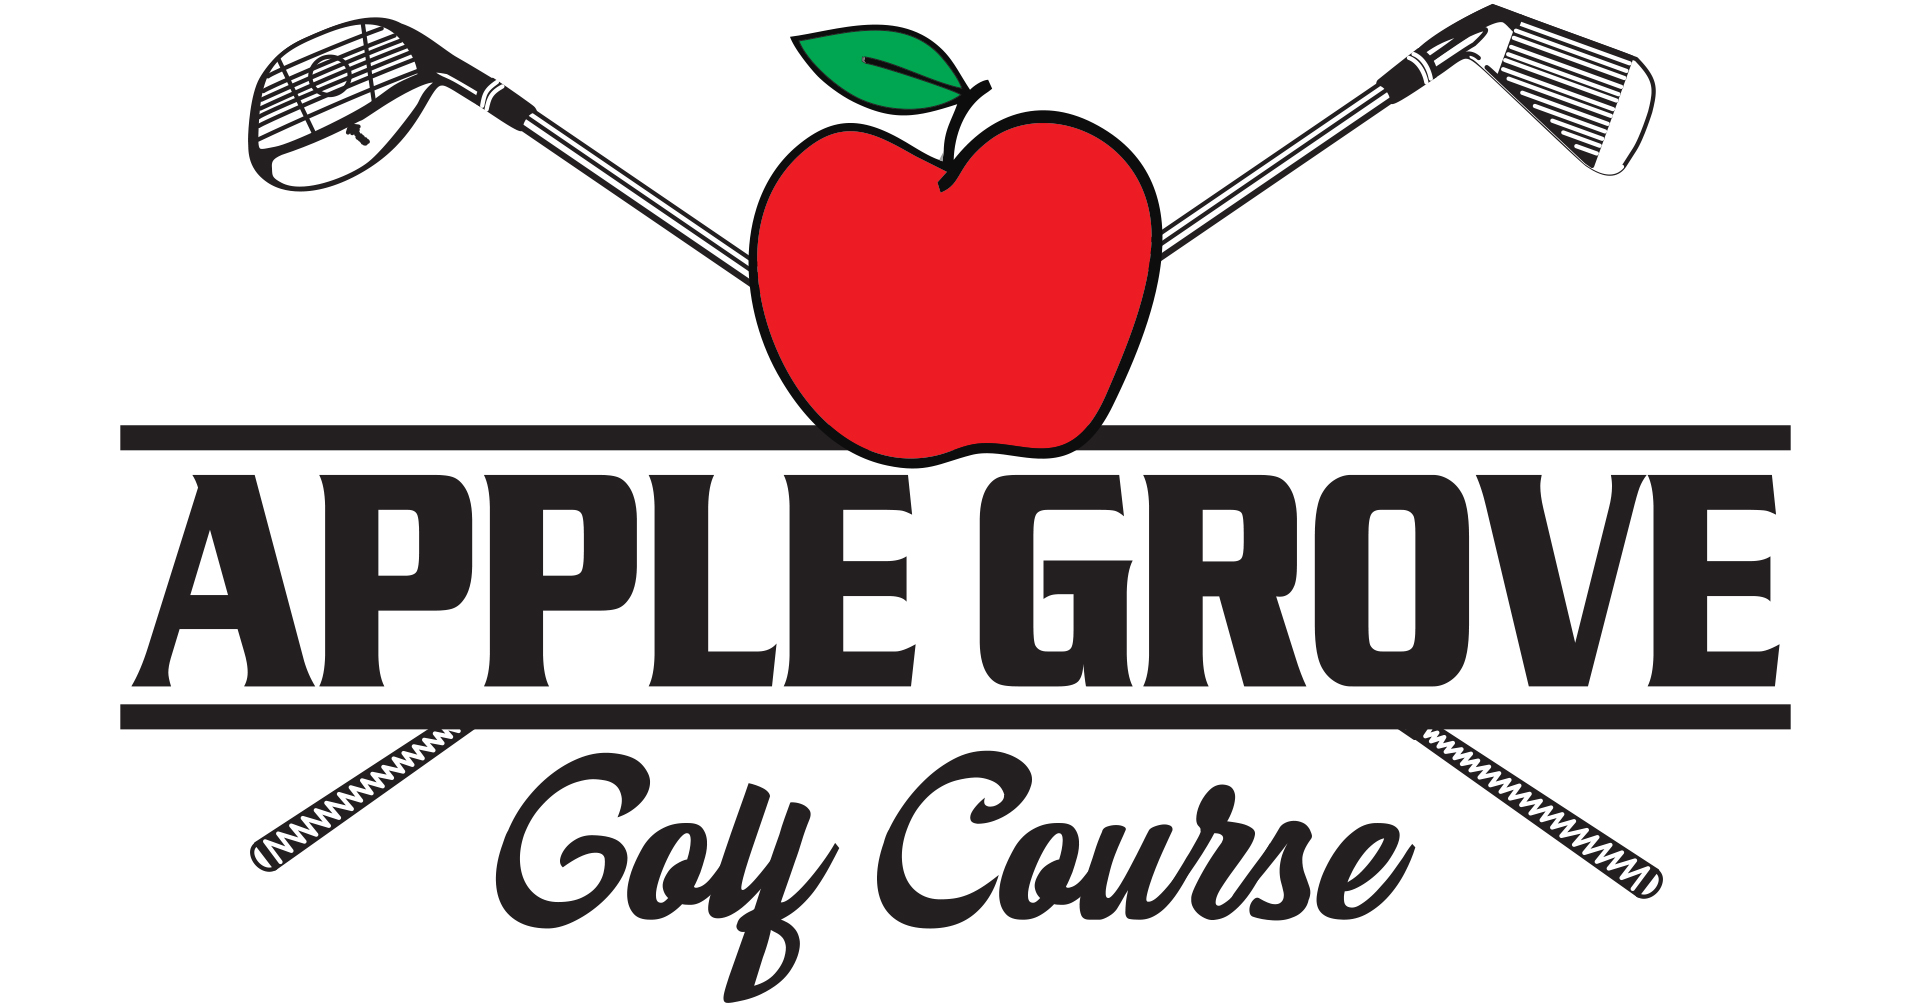 Apple Grove Golf Course